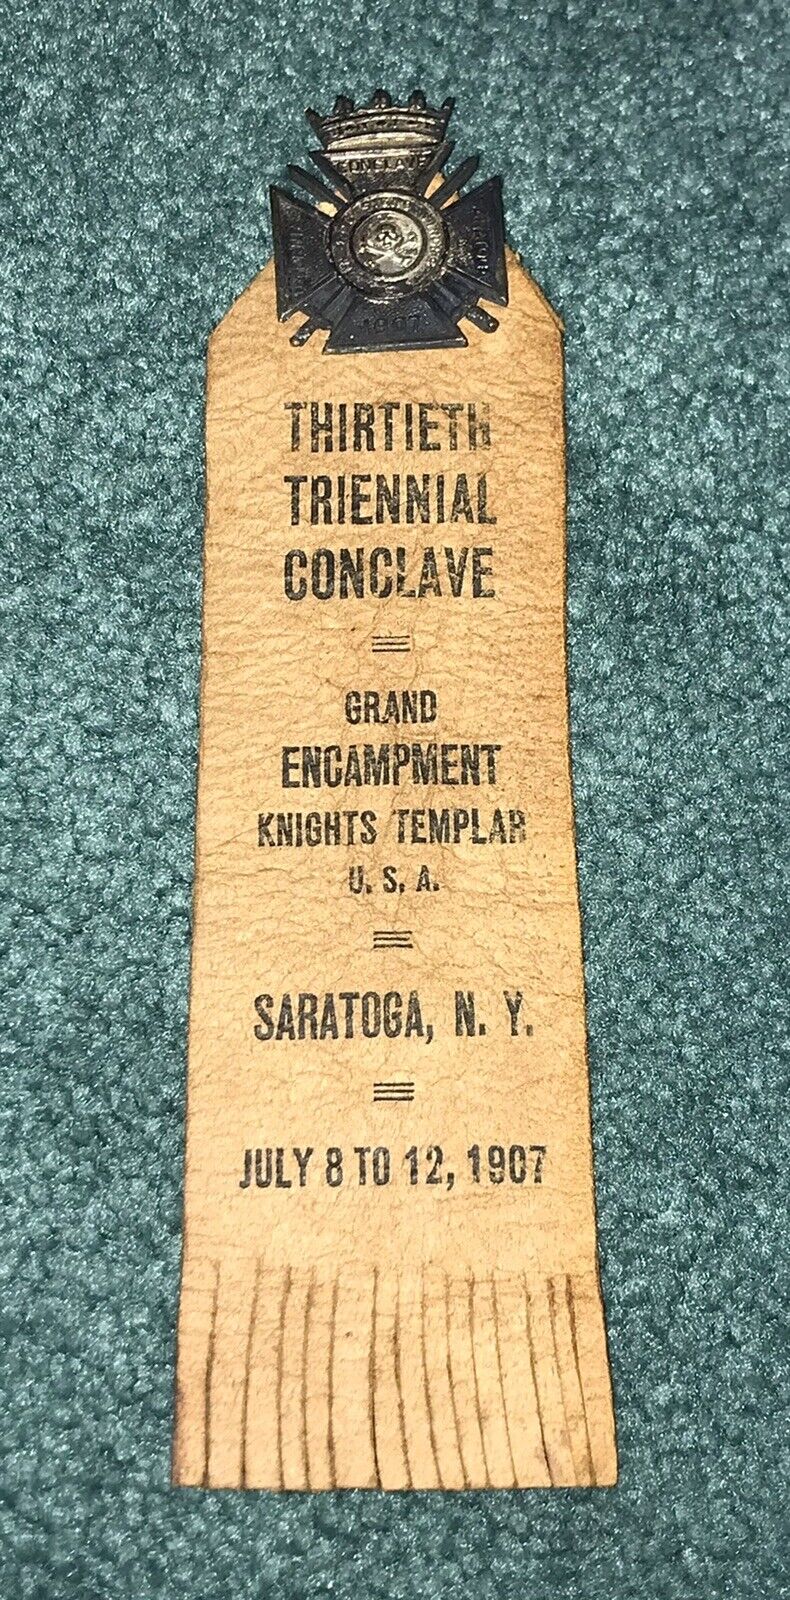 Vintage 1907 Knights Templar 13th Triennial Conclave Grand Encampment Medal